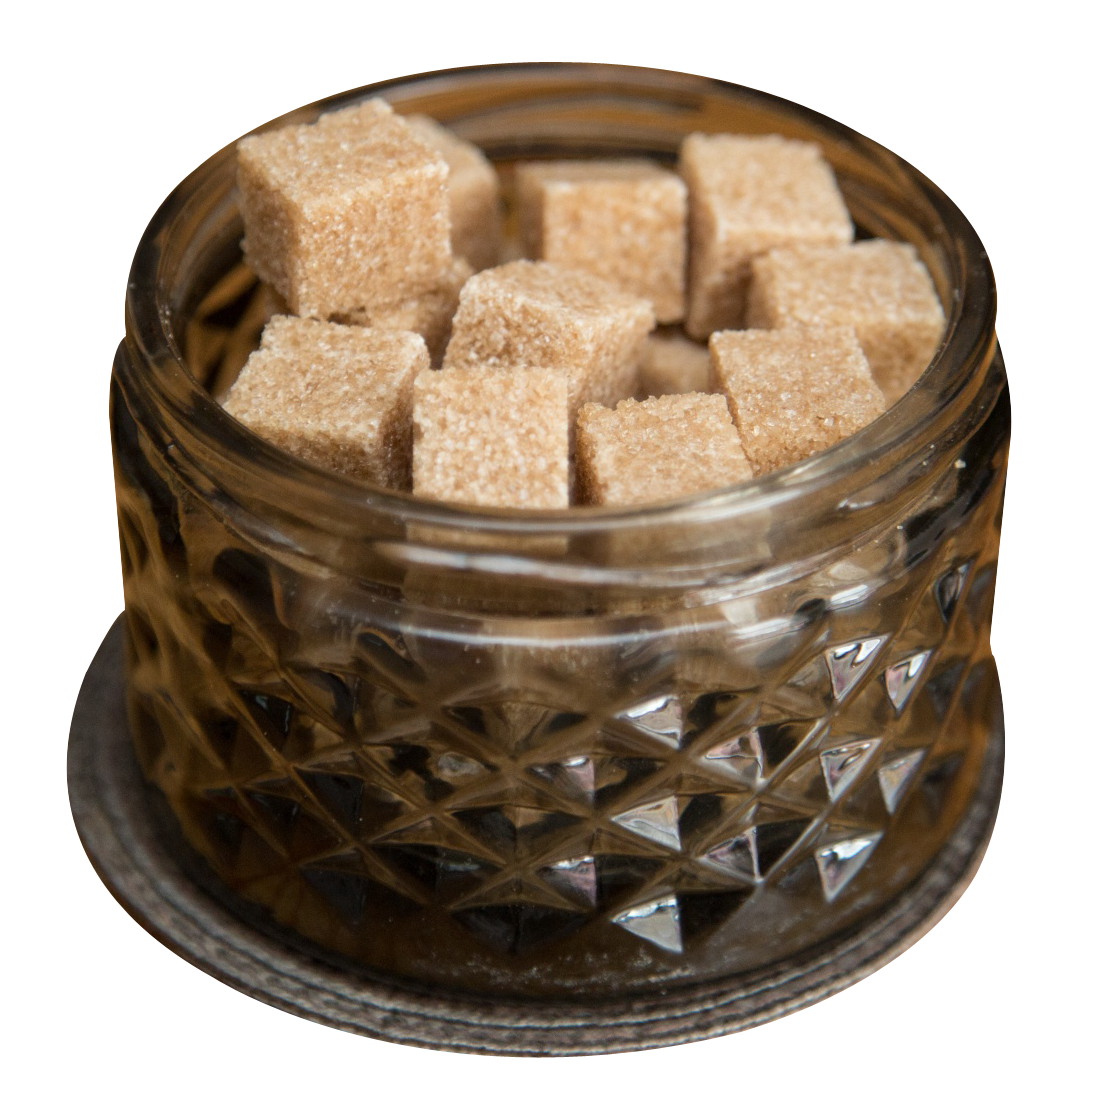 Big Brown Cane Sugar Cubes PNG File